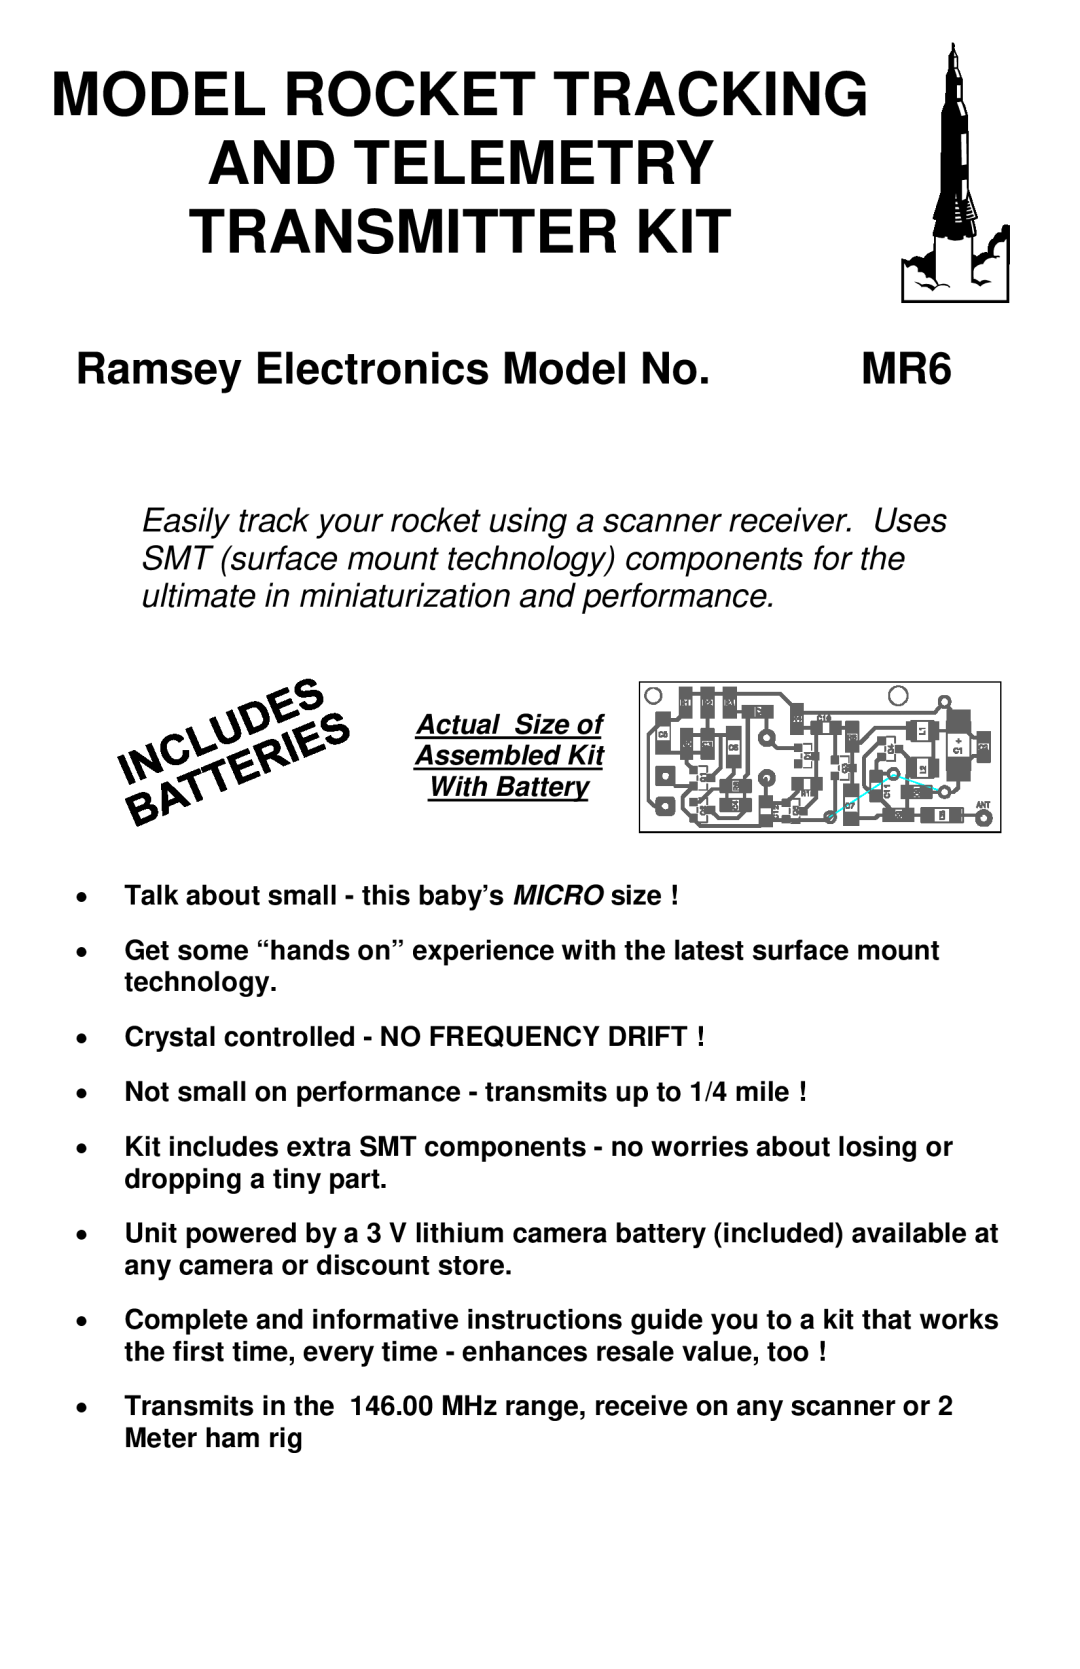 Ramsey Electronics MR6 manual Model Rocket Tracking And Telemetry, Transmitter Kit, Ramsey Electronics Model No 